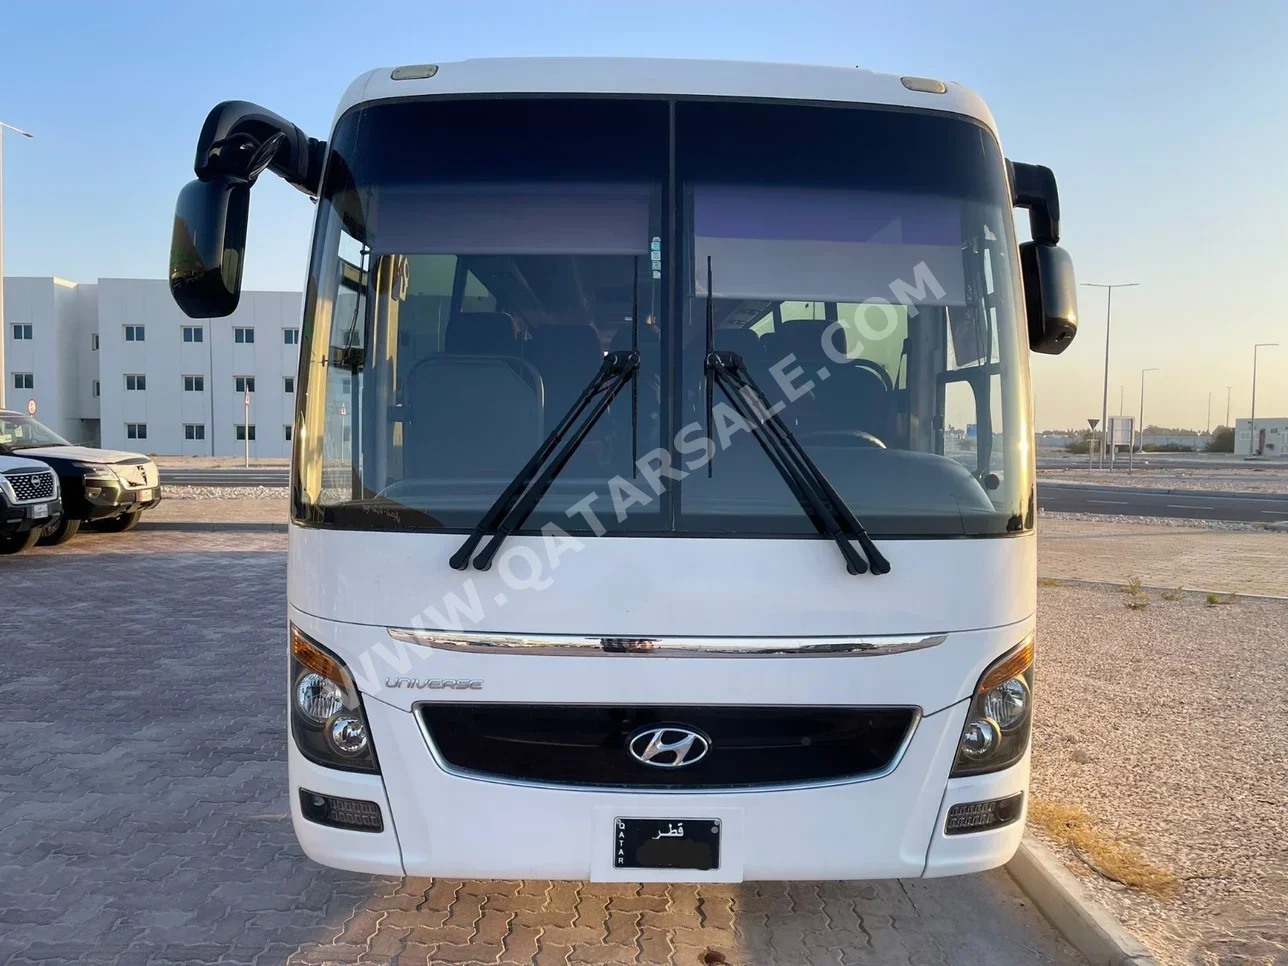 Hyundai  Universe Space  Luxury  2019  Manual  32,000 Km  6 Cylinder  Rear Wheel Drive (RWD)  Van / Bus  White